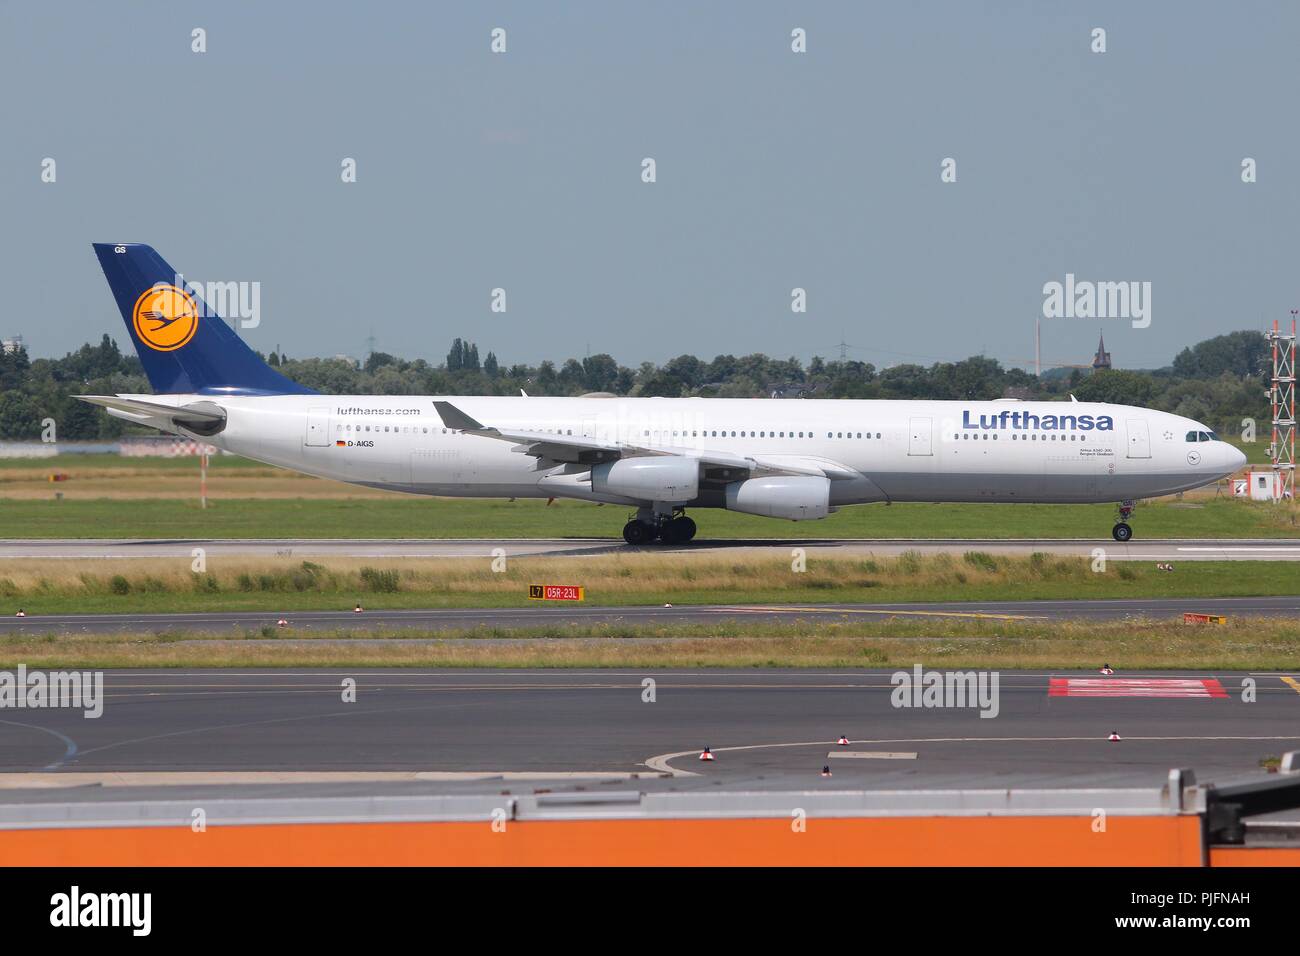 DUSSELDORF, GERMANY - JULY 8, 2013: Lufthansa lands in Dusseldorf Airport, Germany. Lufthansa Group carried over 103 million passengers in 2012. Stock Photo